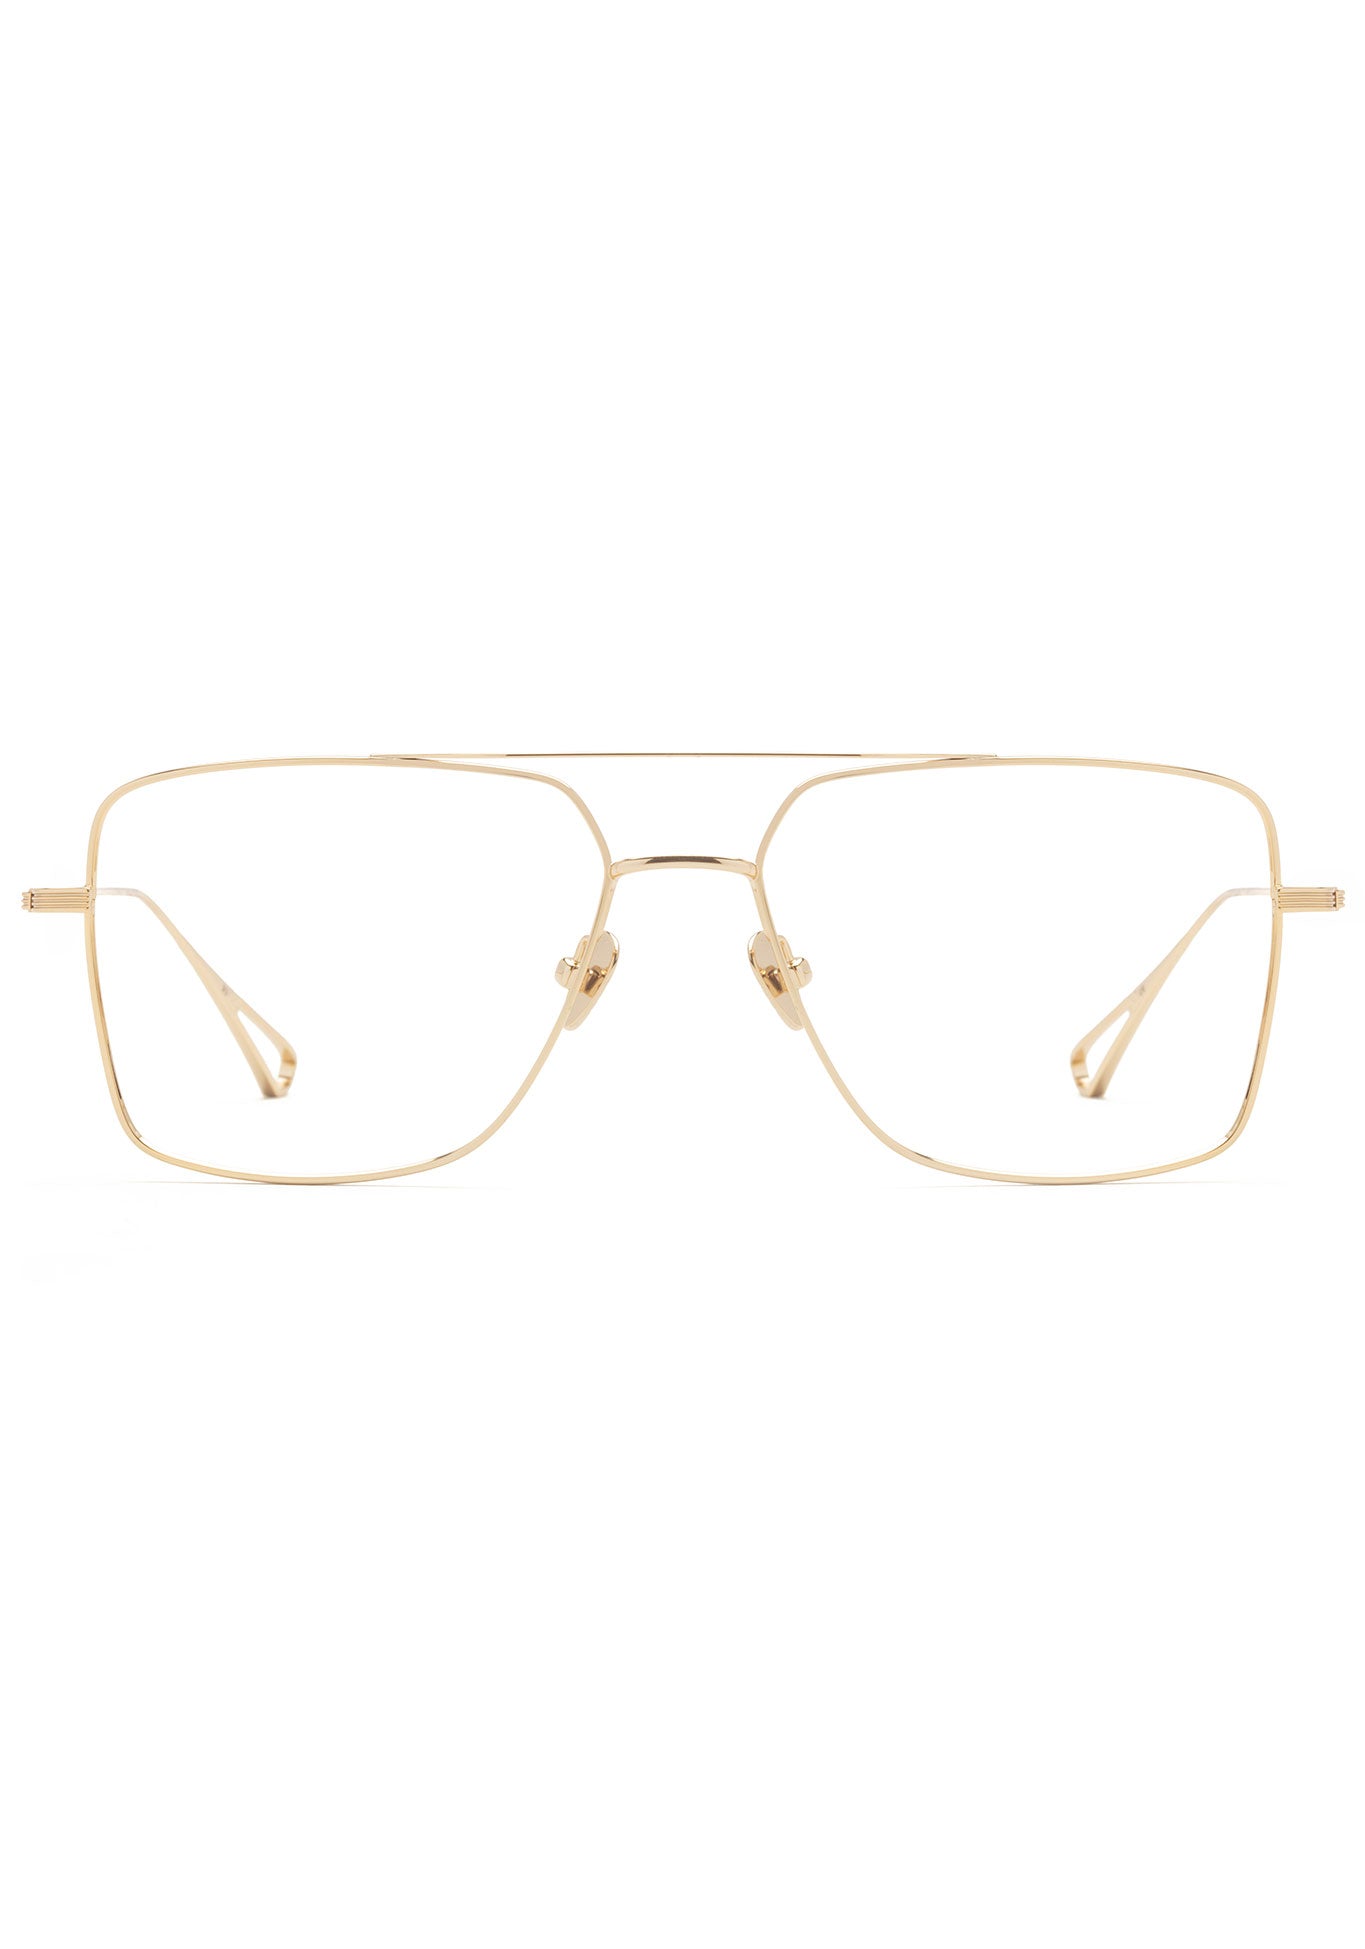 KREWE GLASSES - REYNOLDS | 12K Titanium handcrafted, luxury 12K gold metal aviator glasses